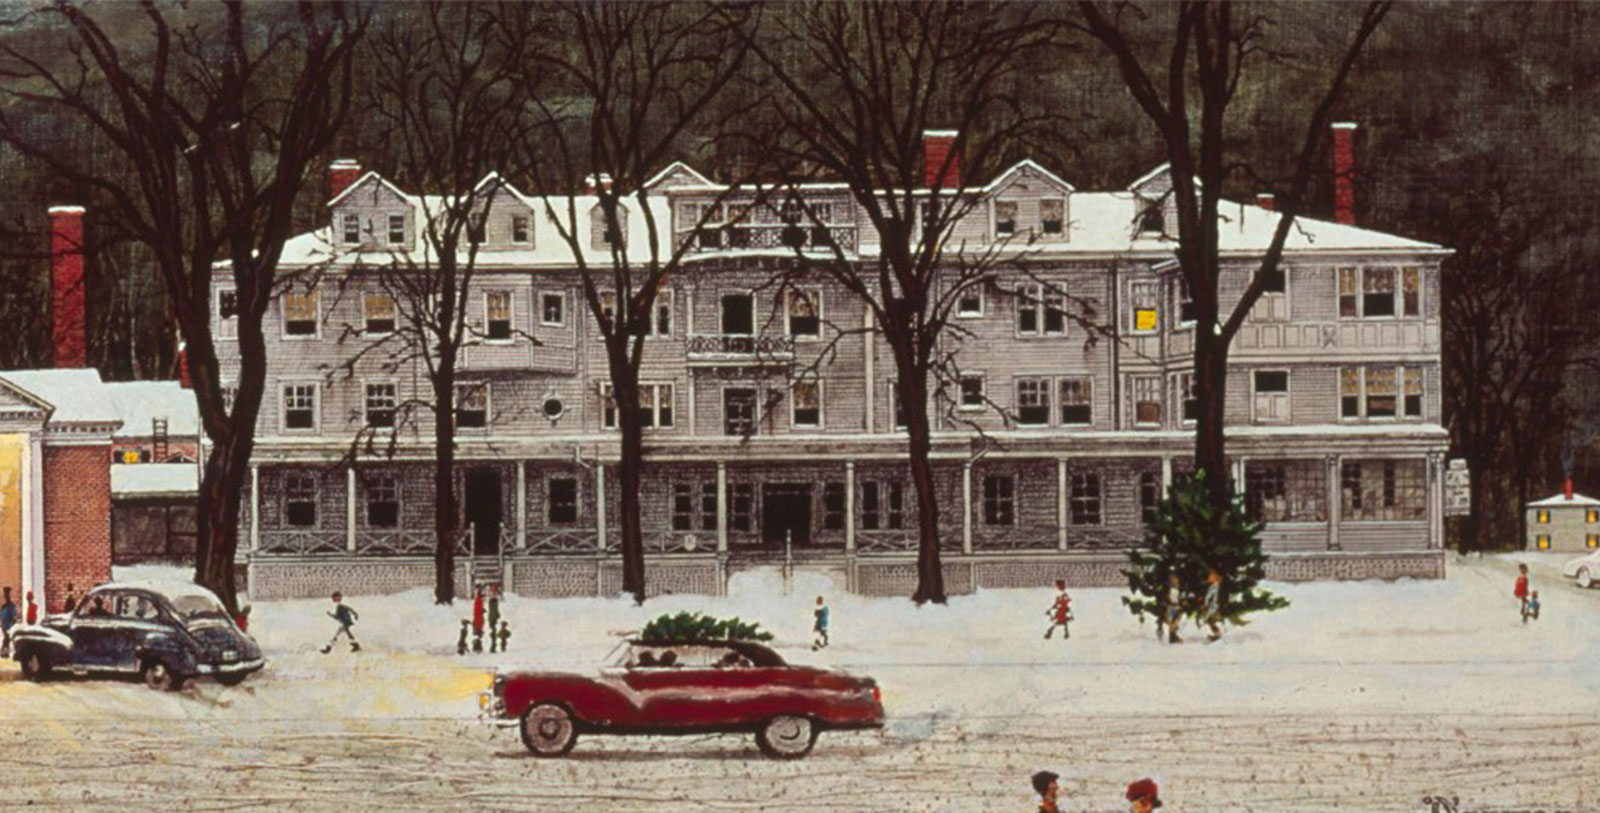 Image of Norman Rockwell's Stockbridge at Christmas painting completed in 1967, The Red Lion Inn, 1777, Member of Historic Hotels of America, Stockbridge, Massachusetts, History